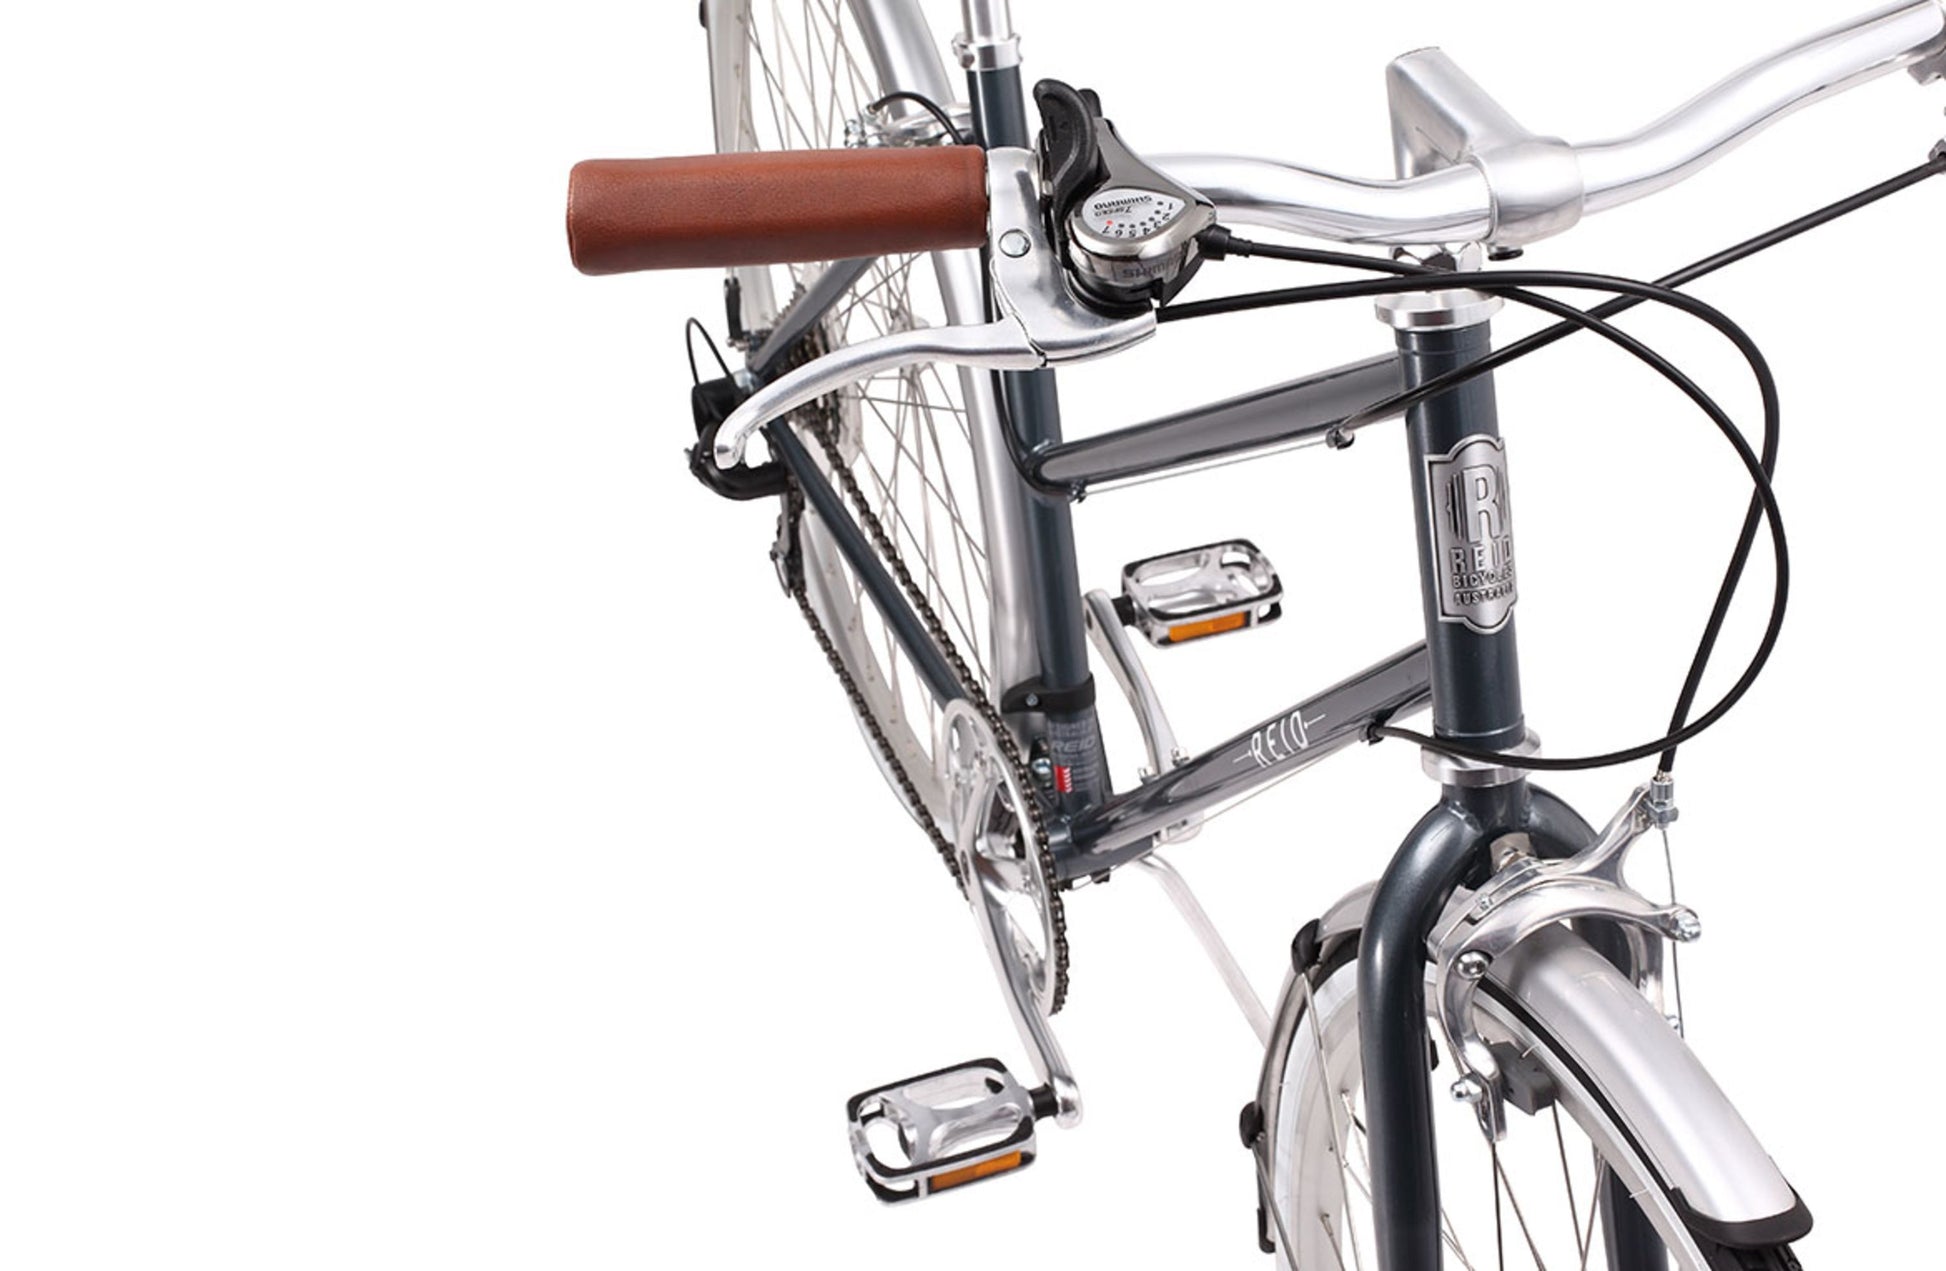 Ladies Esprit Vintage Bike in Metallic Charcoal showing vintage handlebars and Shimano shifters from Reid Cycles Australia